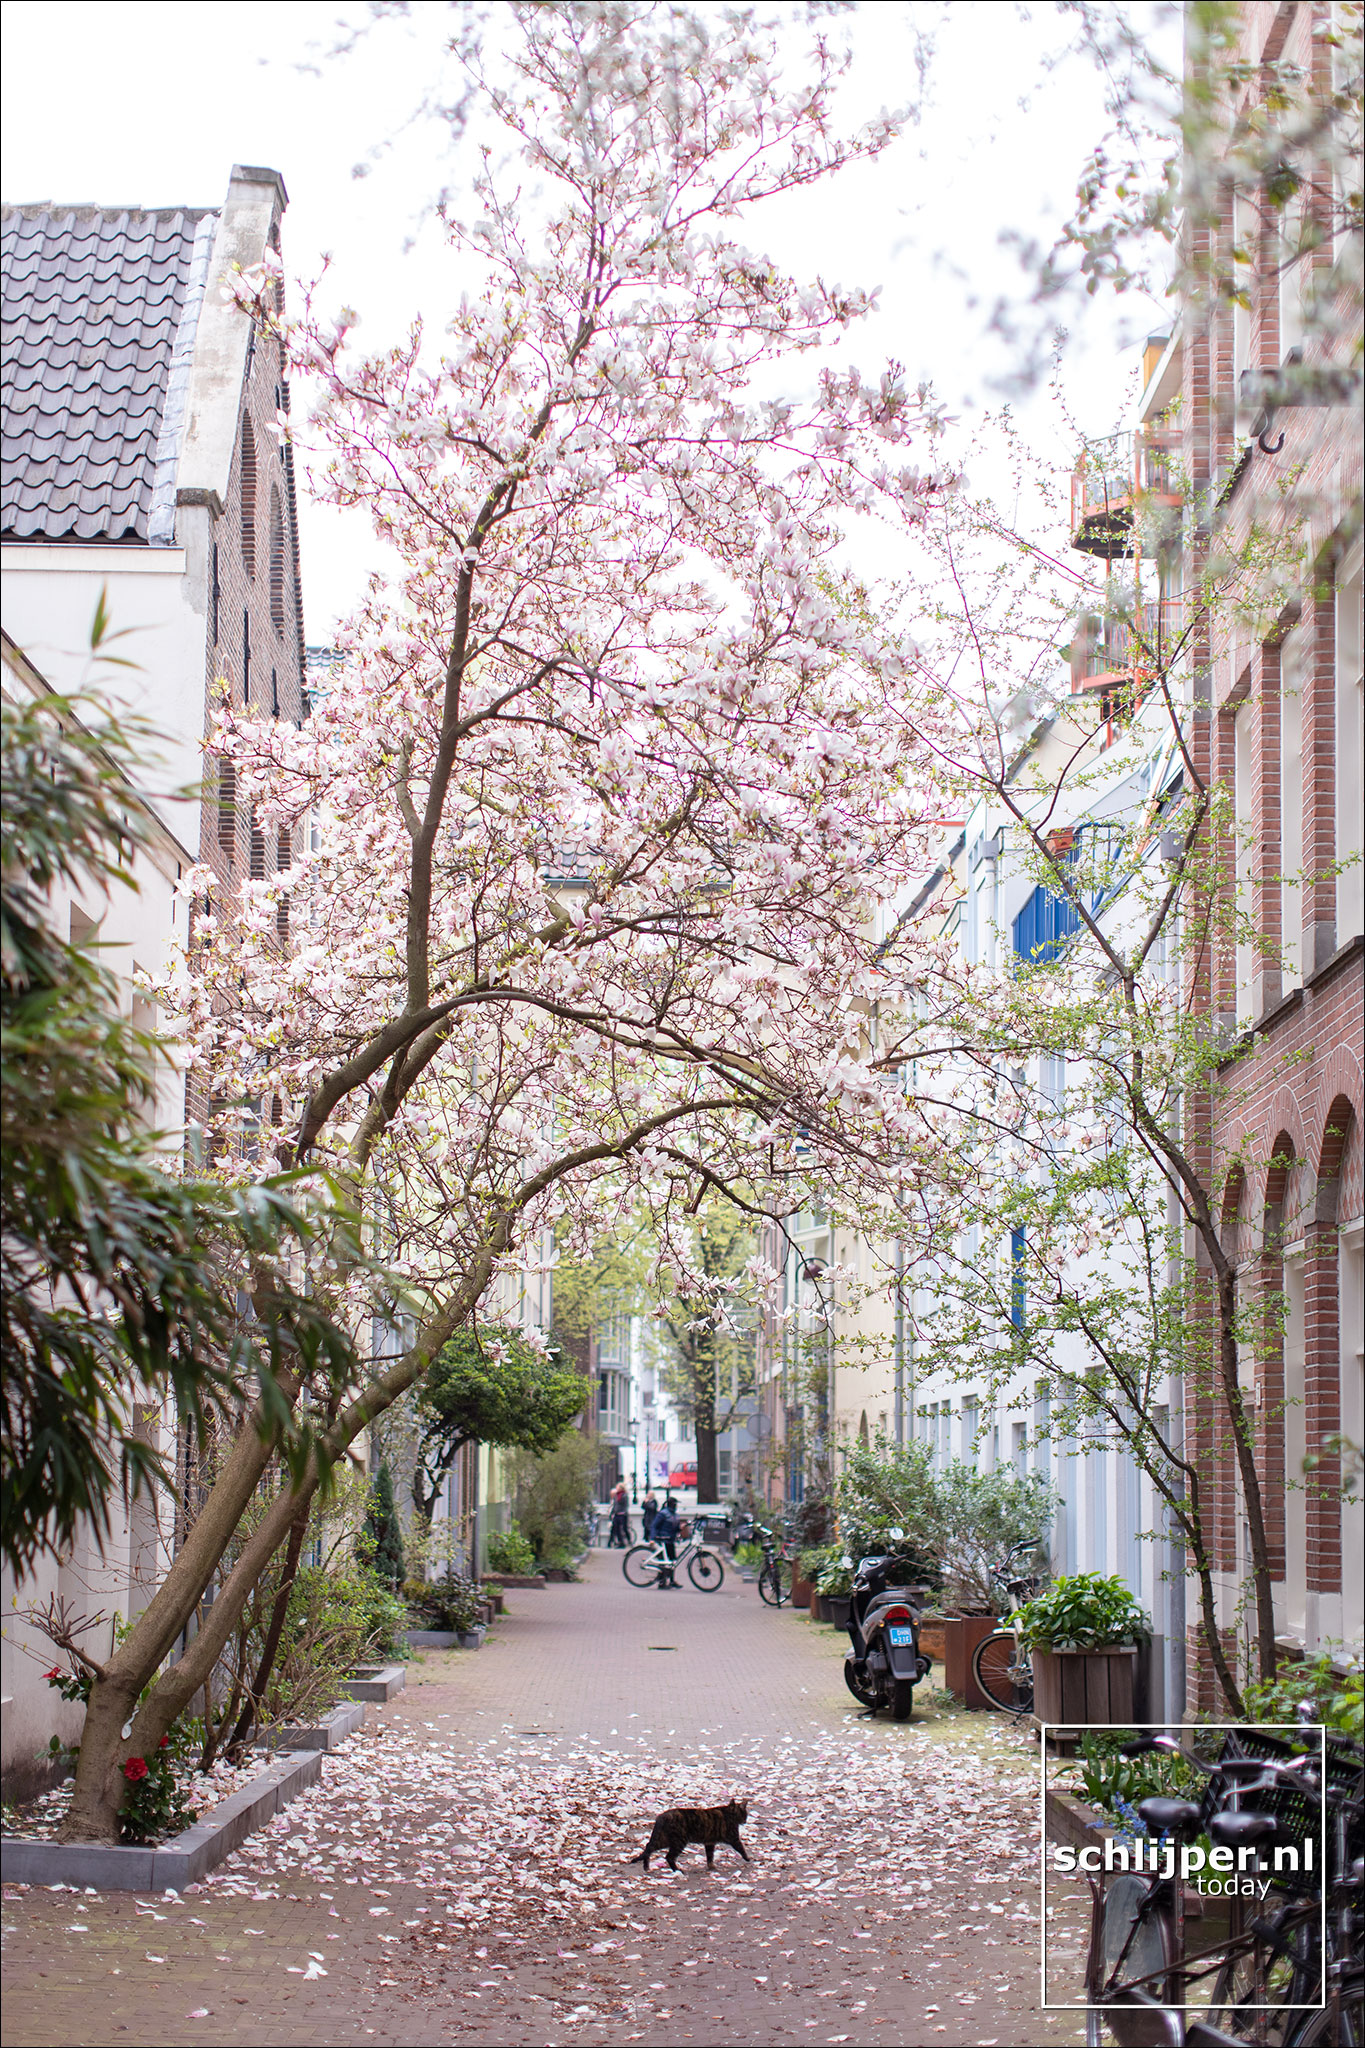 Nederland, Amsterdam, 2 april 2019